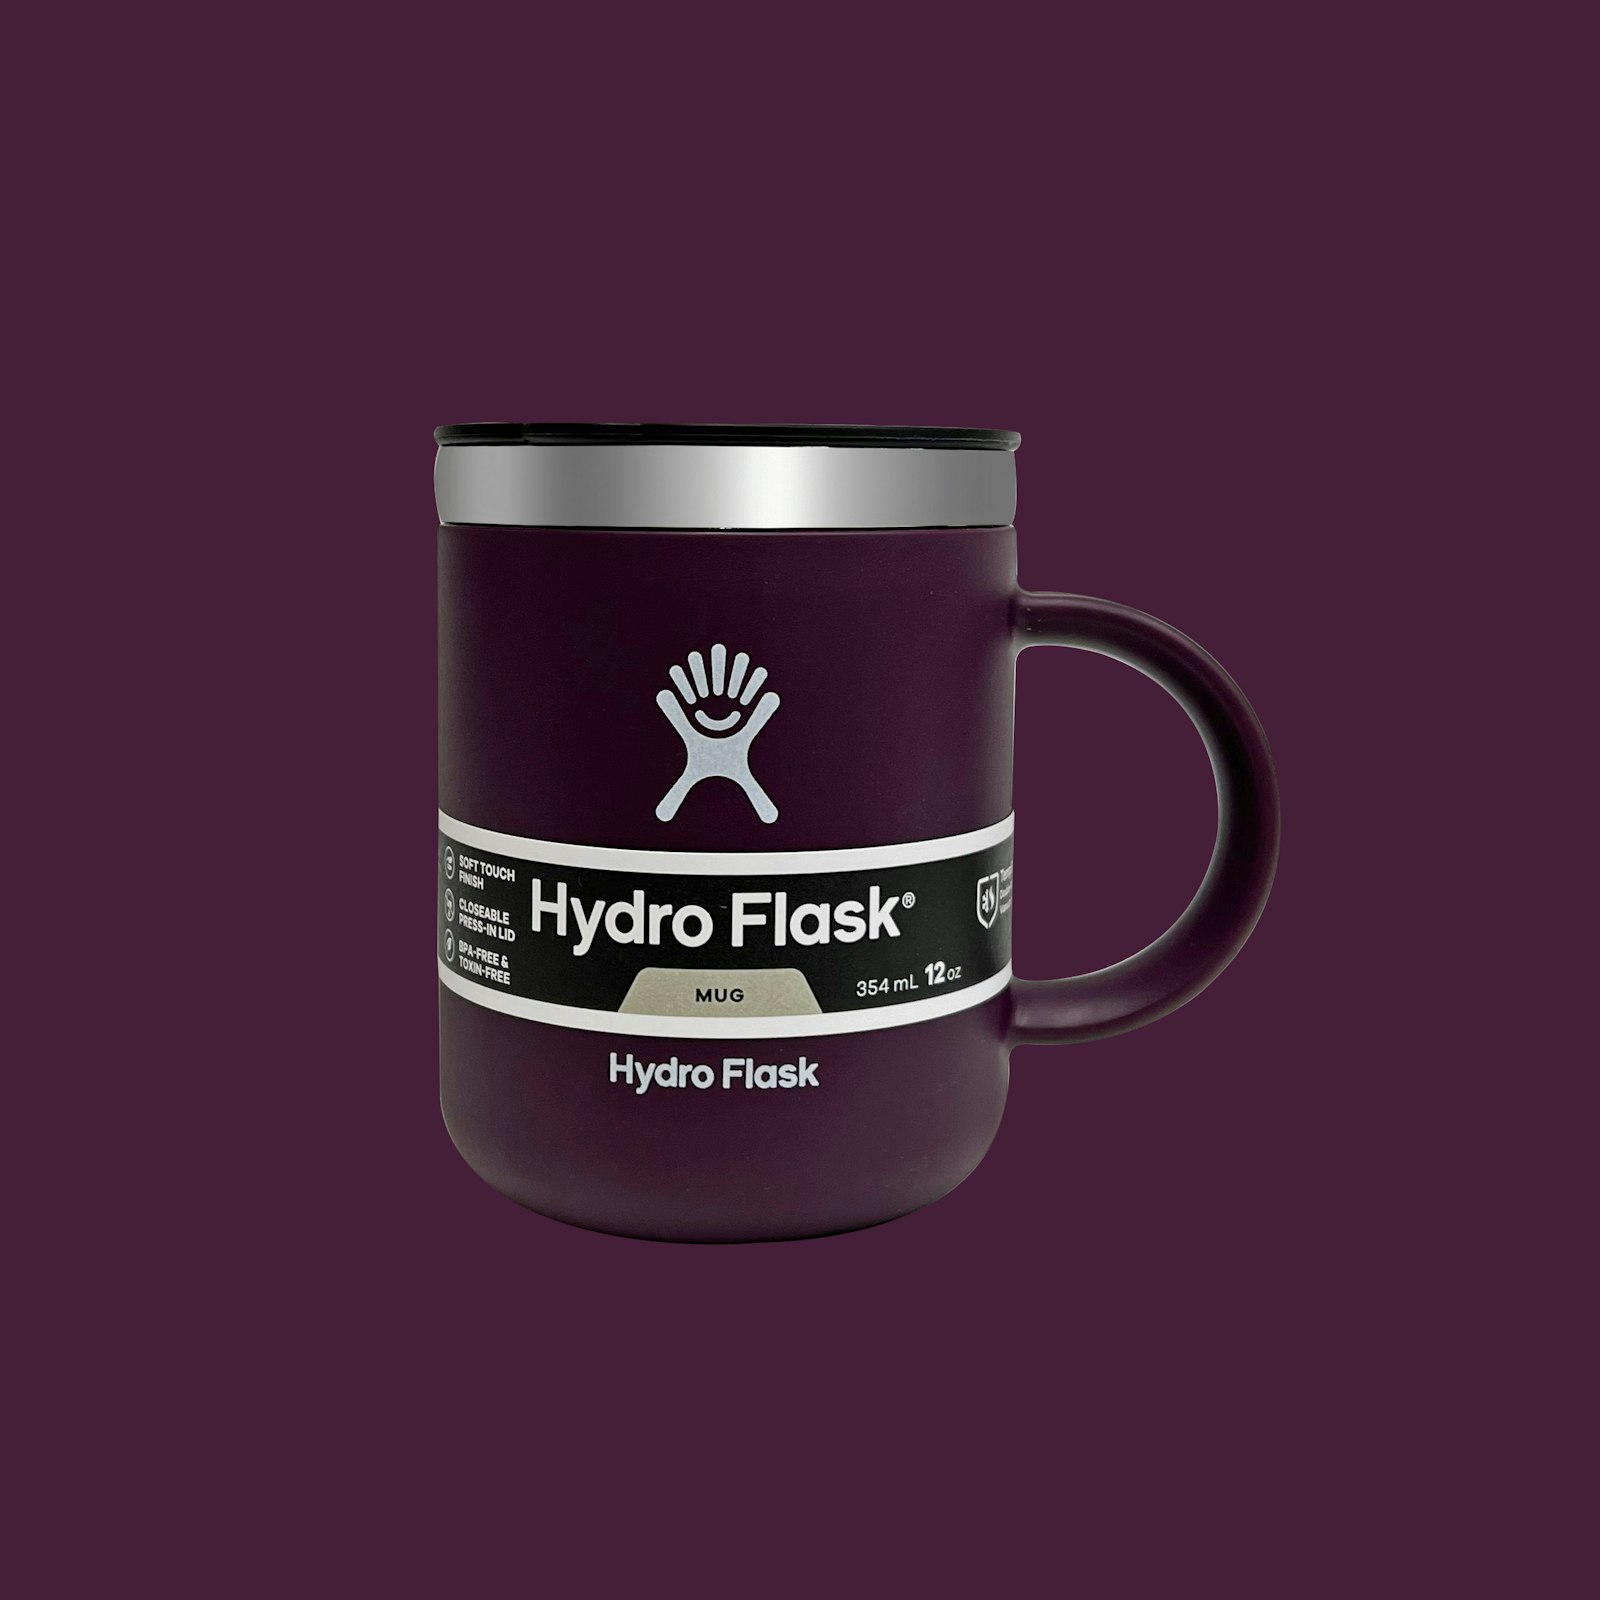 Hydro Flask social purplebackground